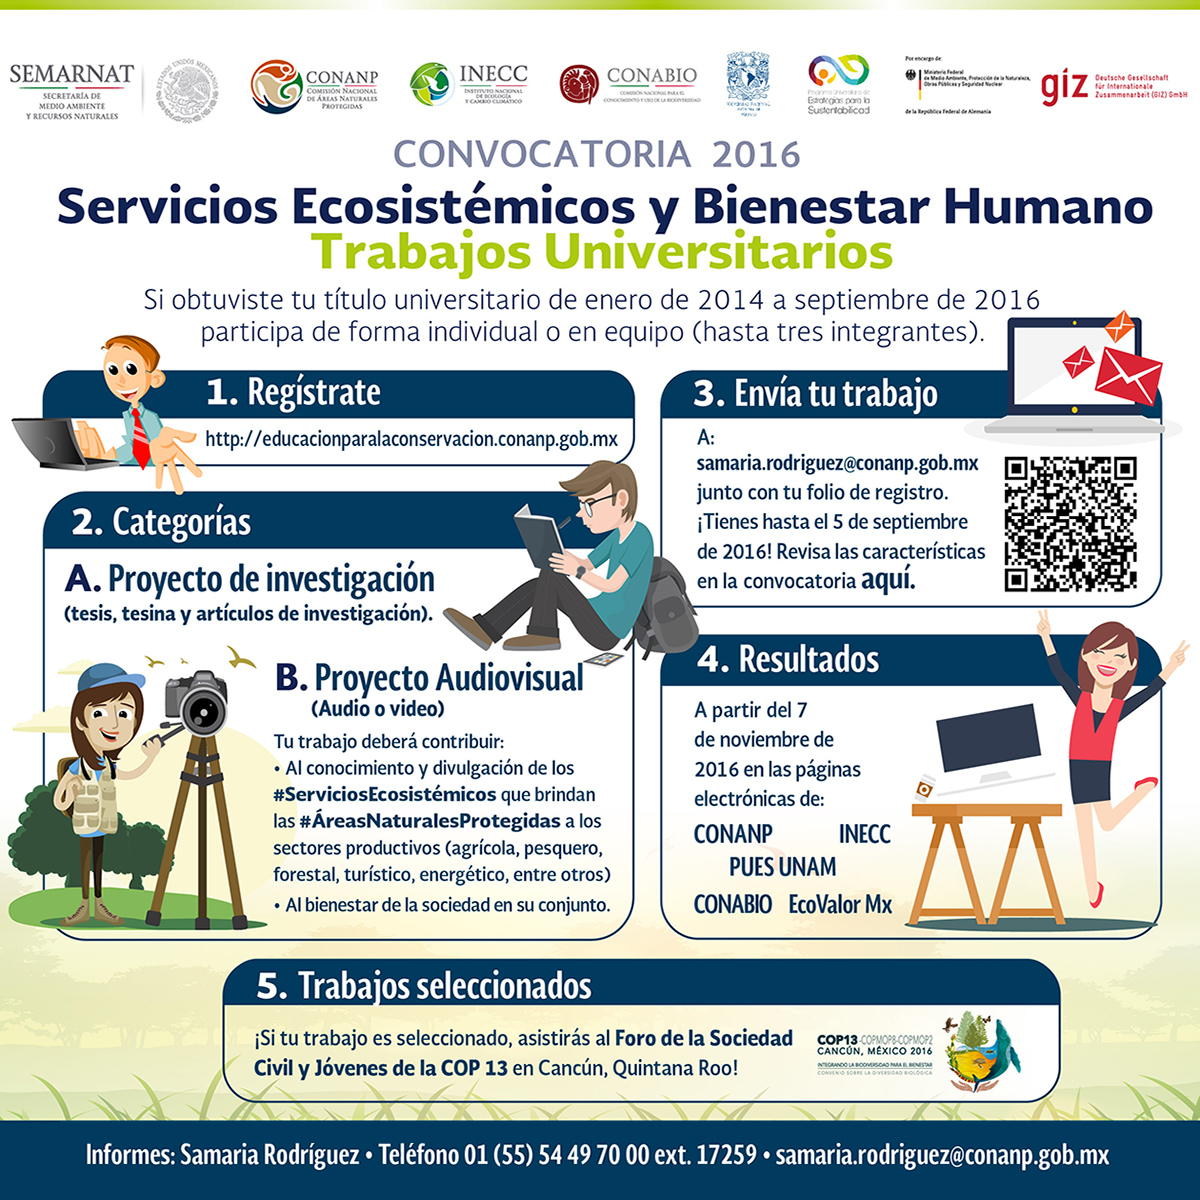 /cms/uploads/image/file/176869/Infografia_Tarabajos_Universitarios_1200px-01.jpg.jpeg